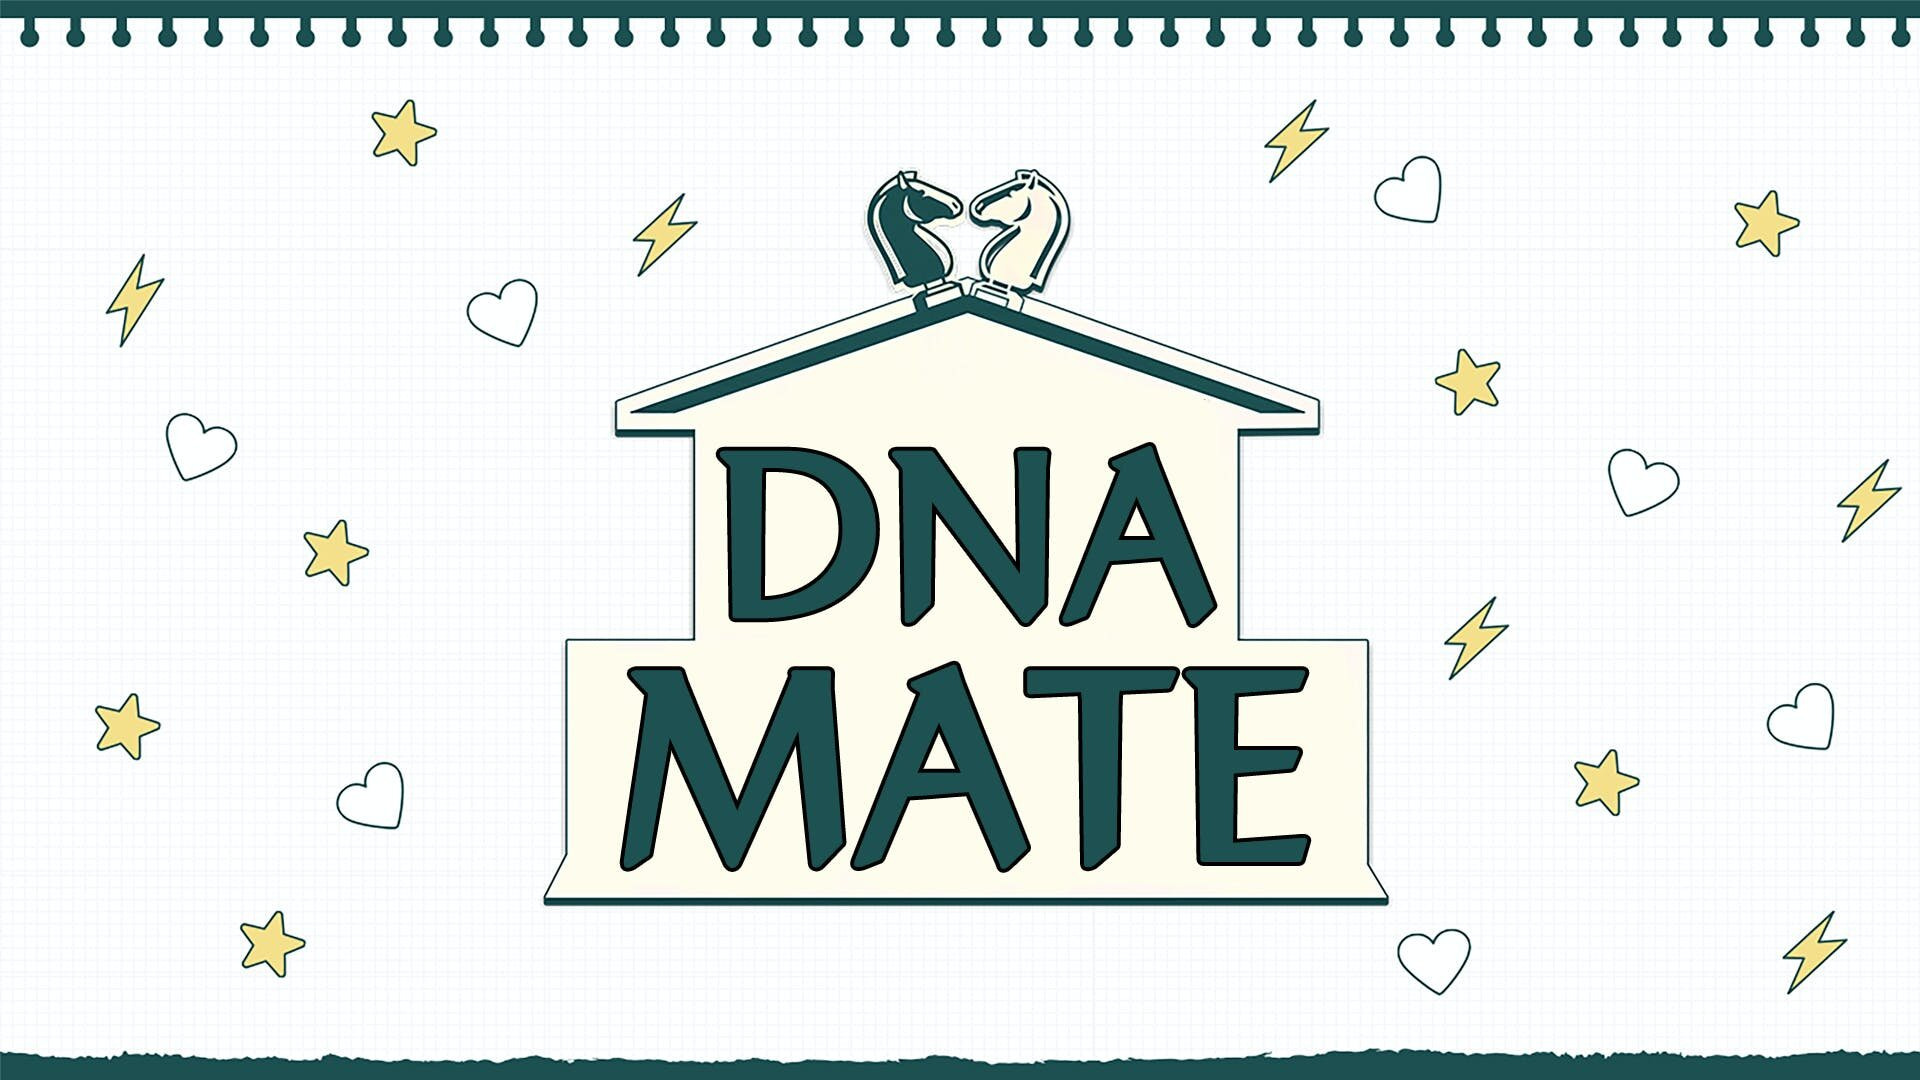 Show DNA Mate